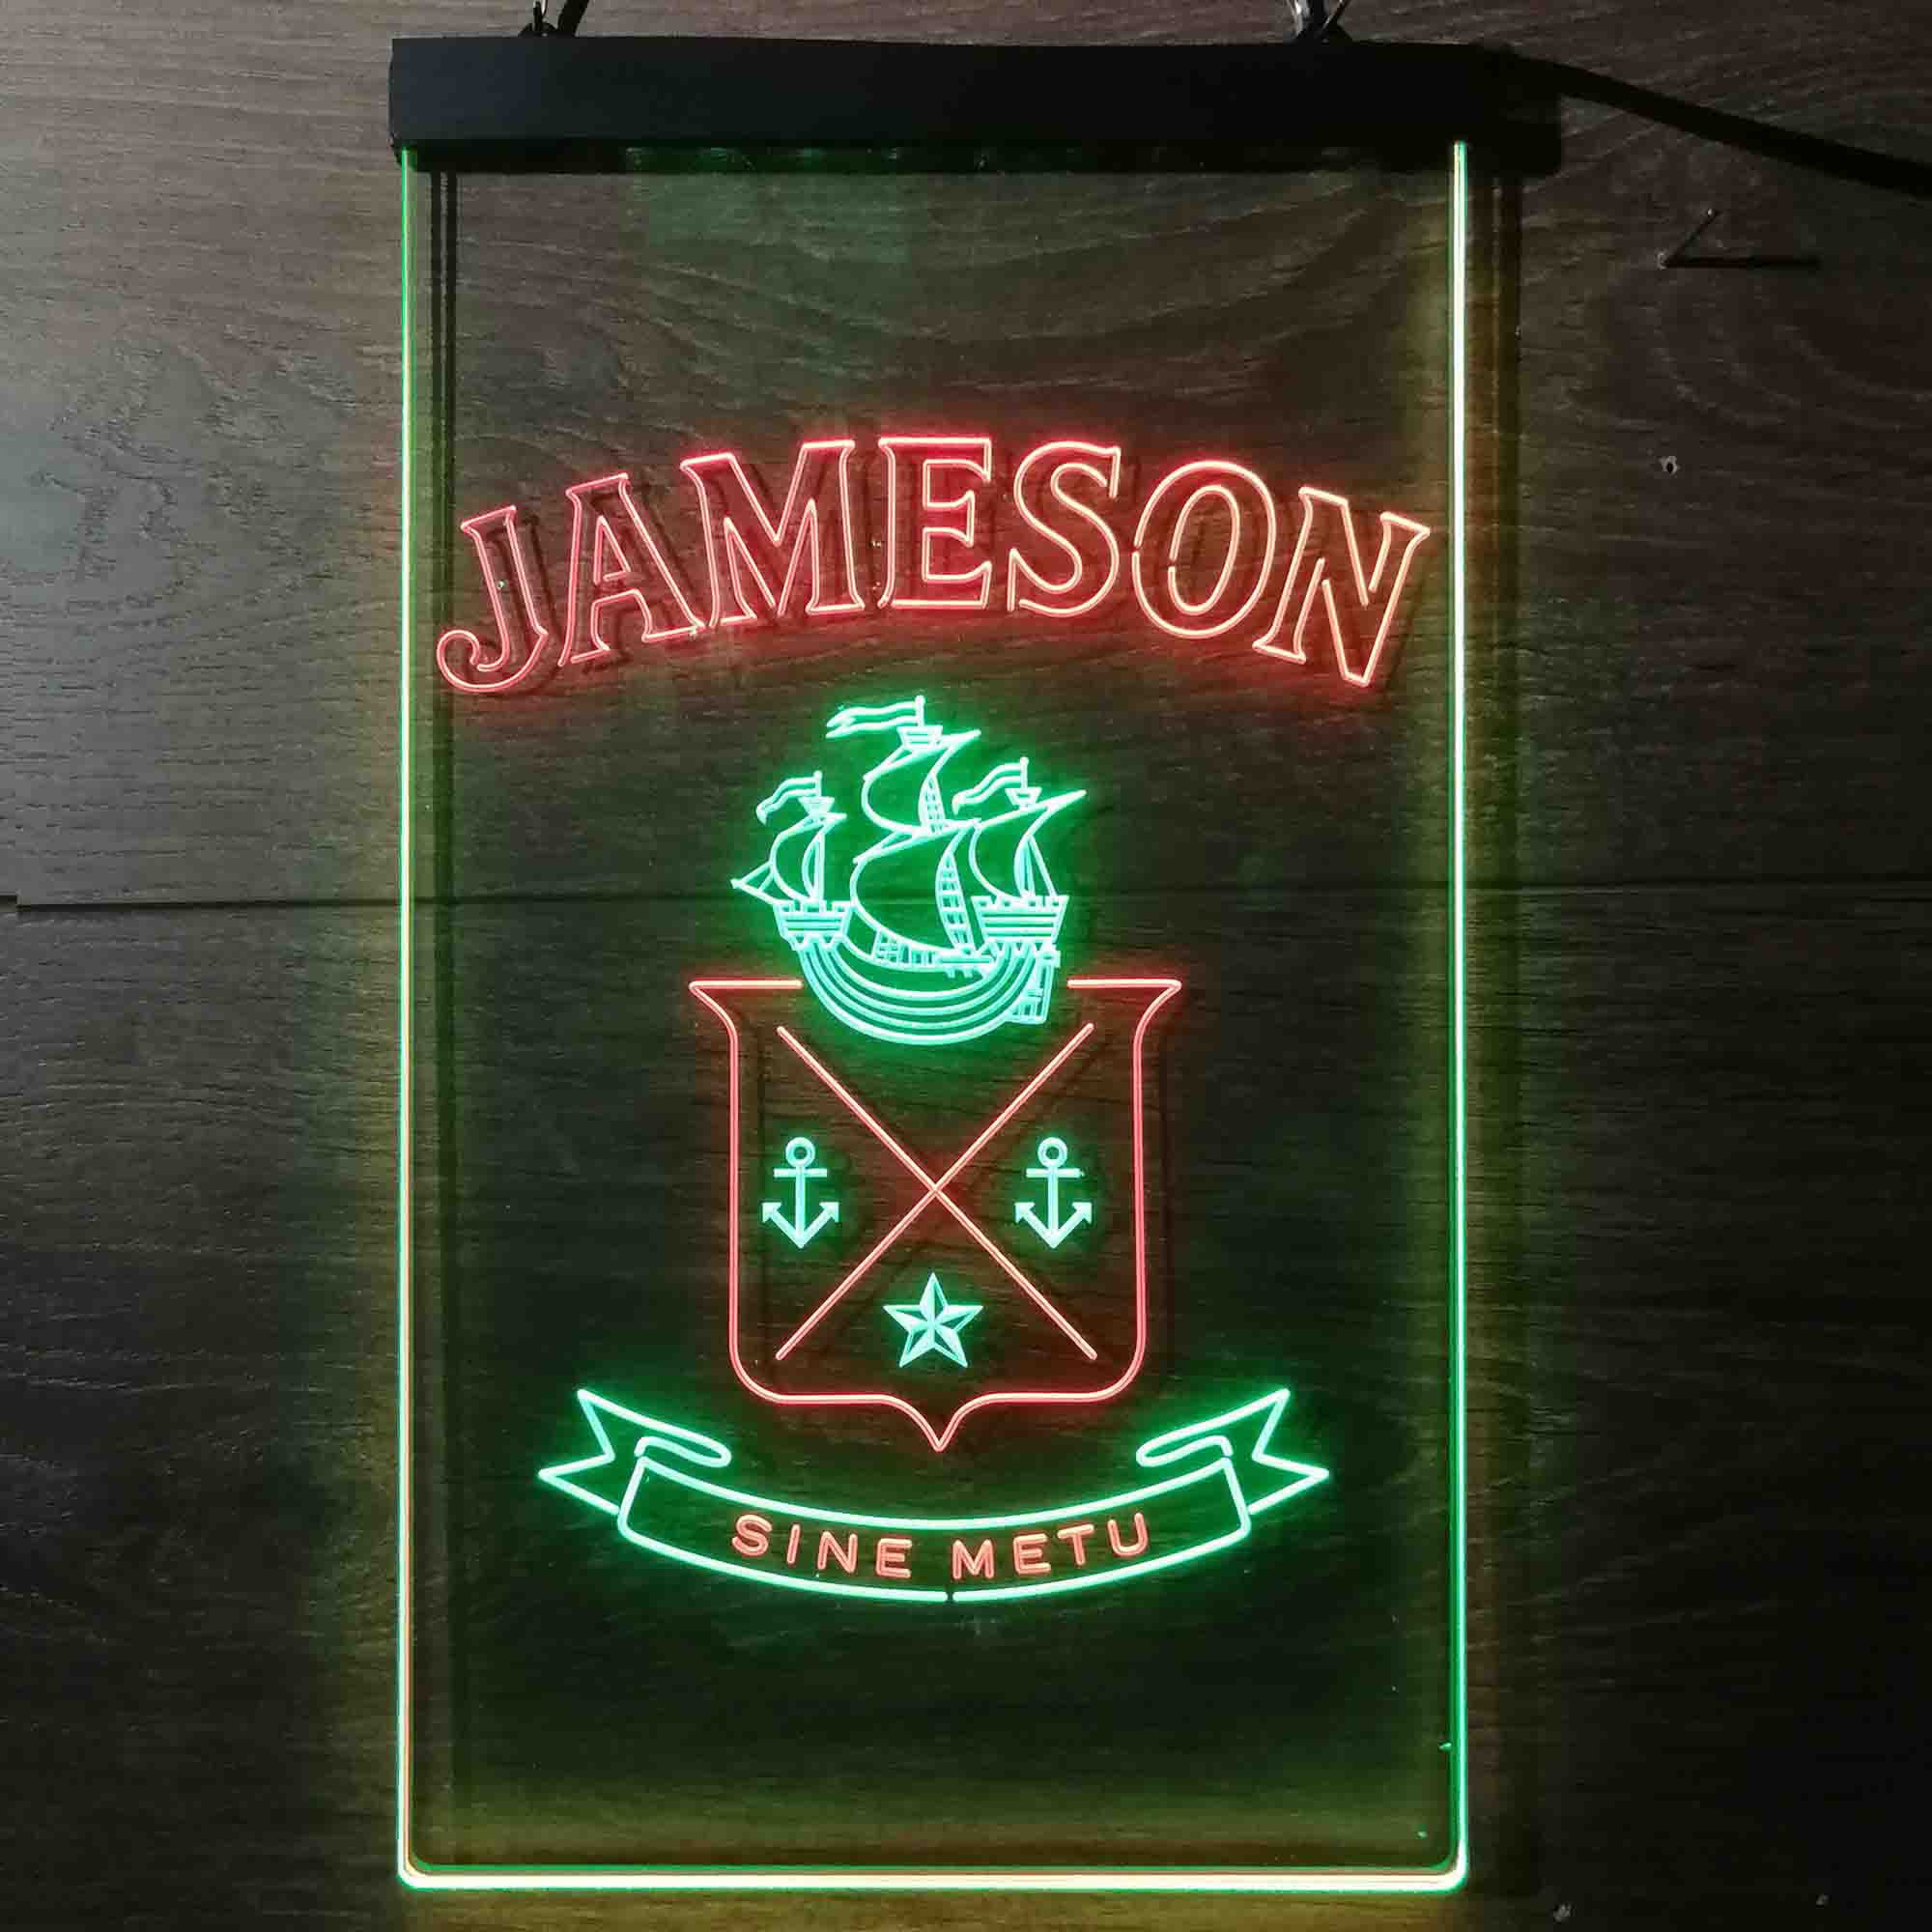 Jameson Sine Metu Dual Color LED Neon Sign ProLedSign